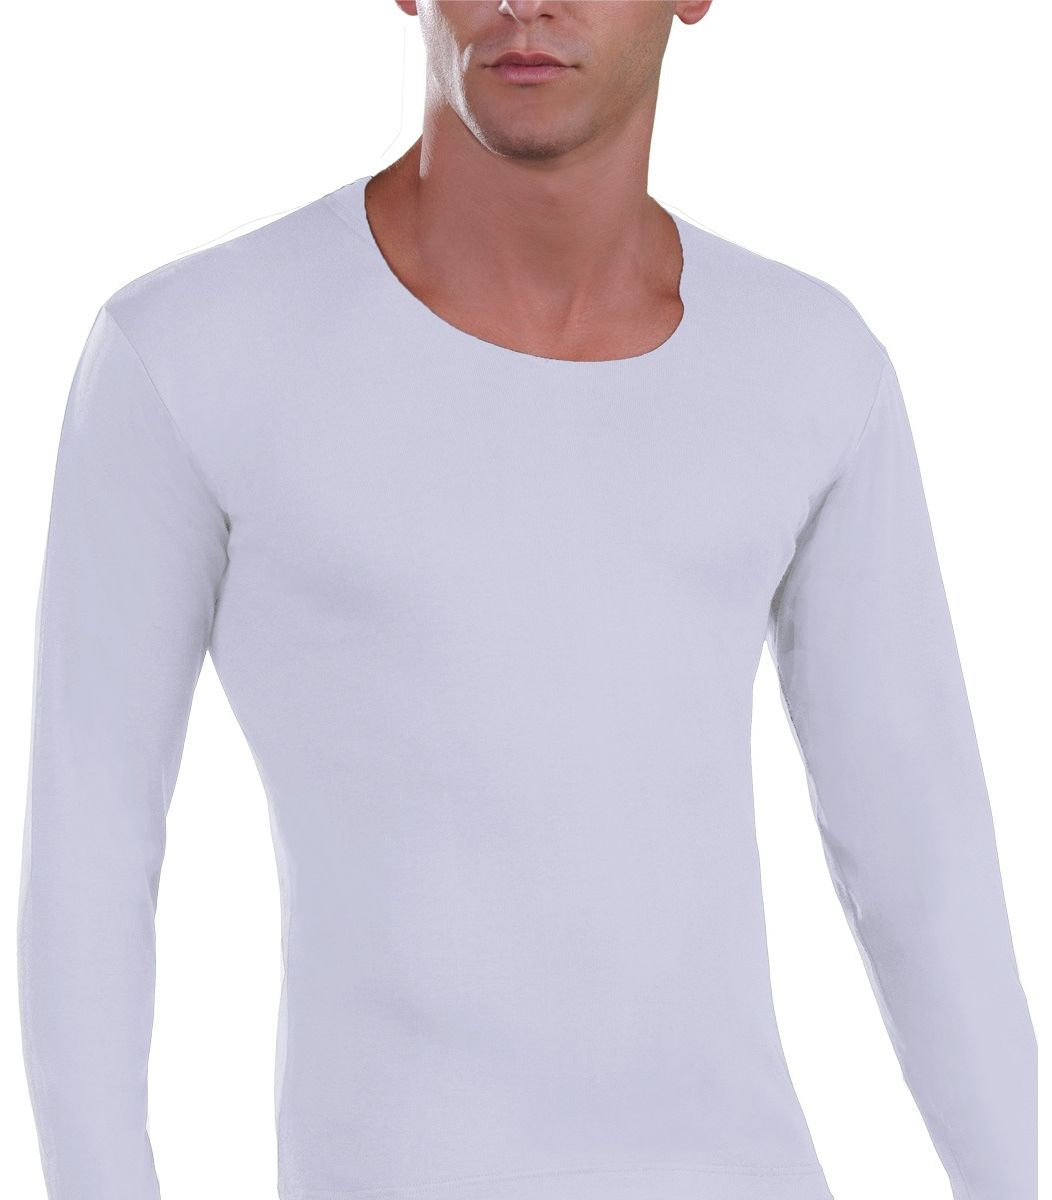 Men underwear Long Sleeve, open neck, cotton, oversized, white